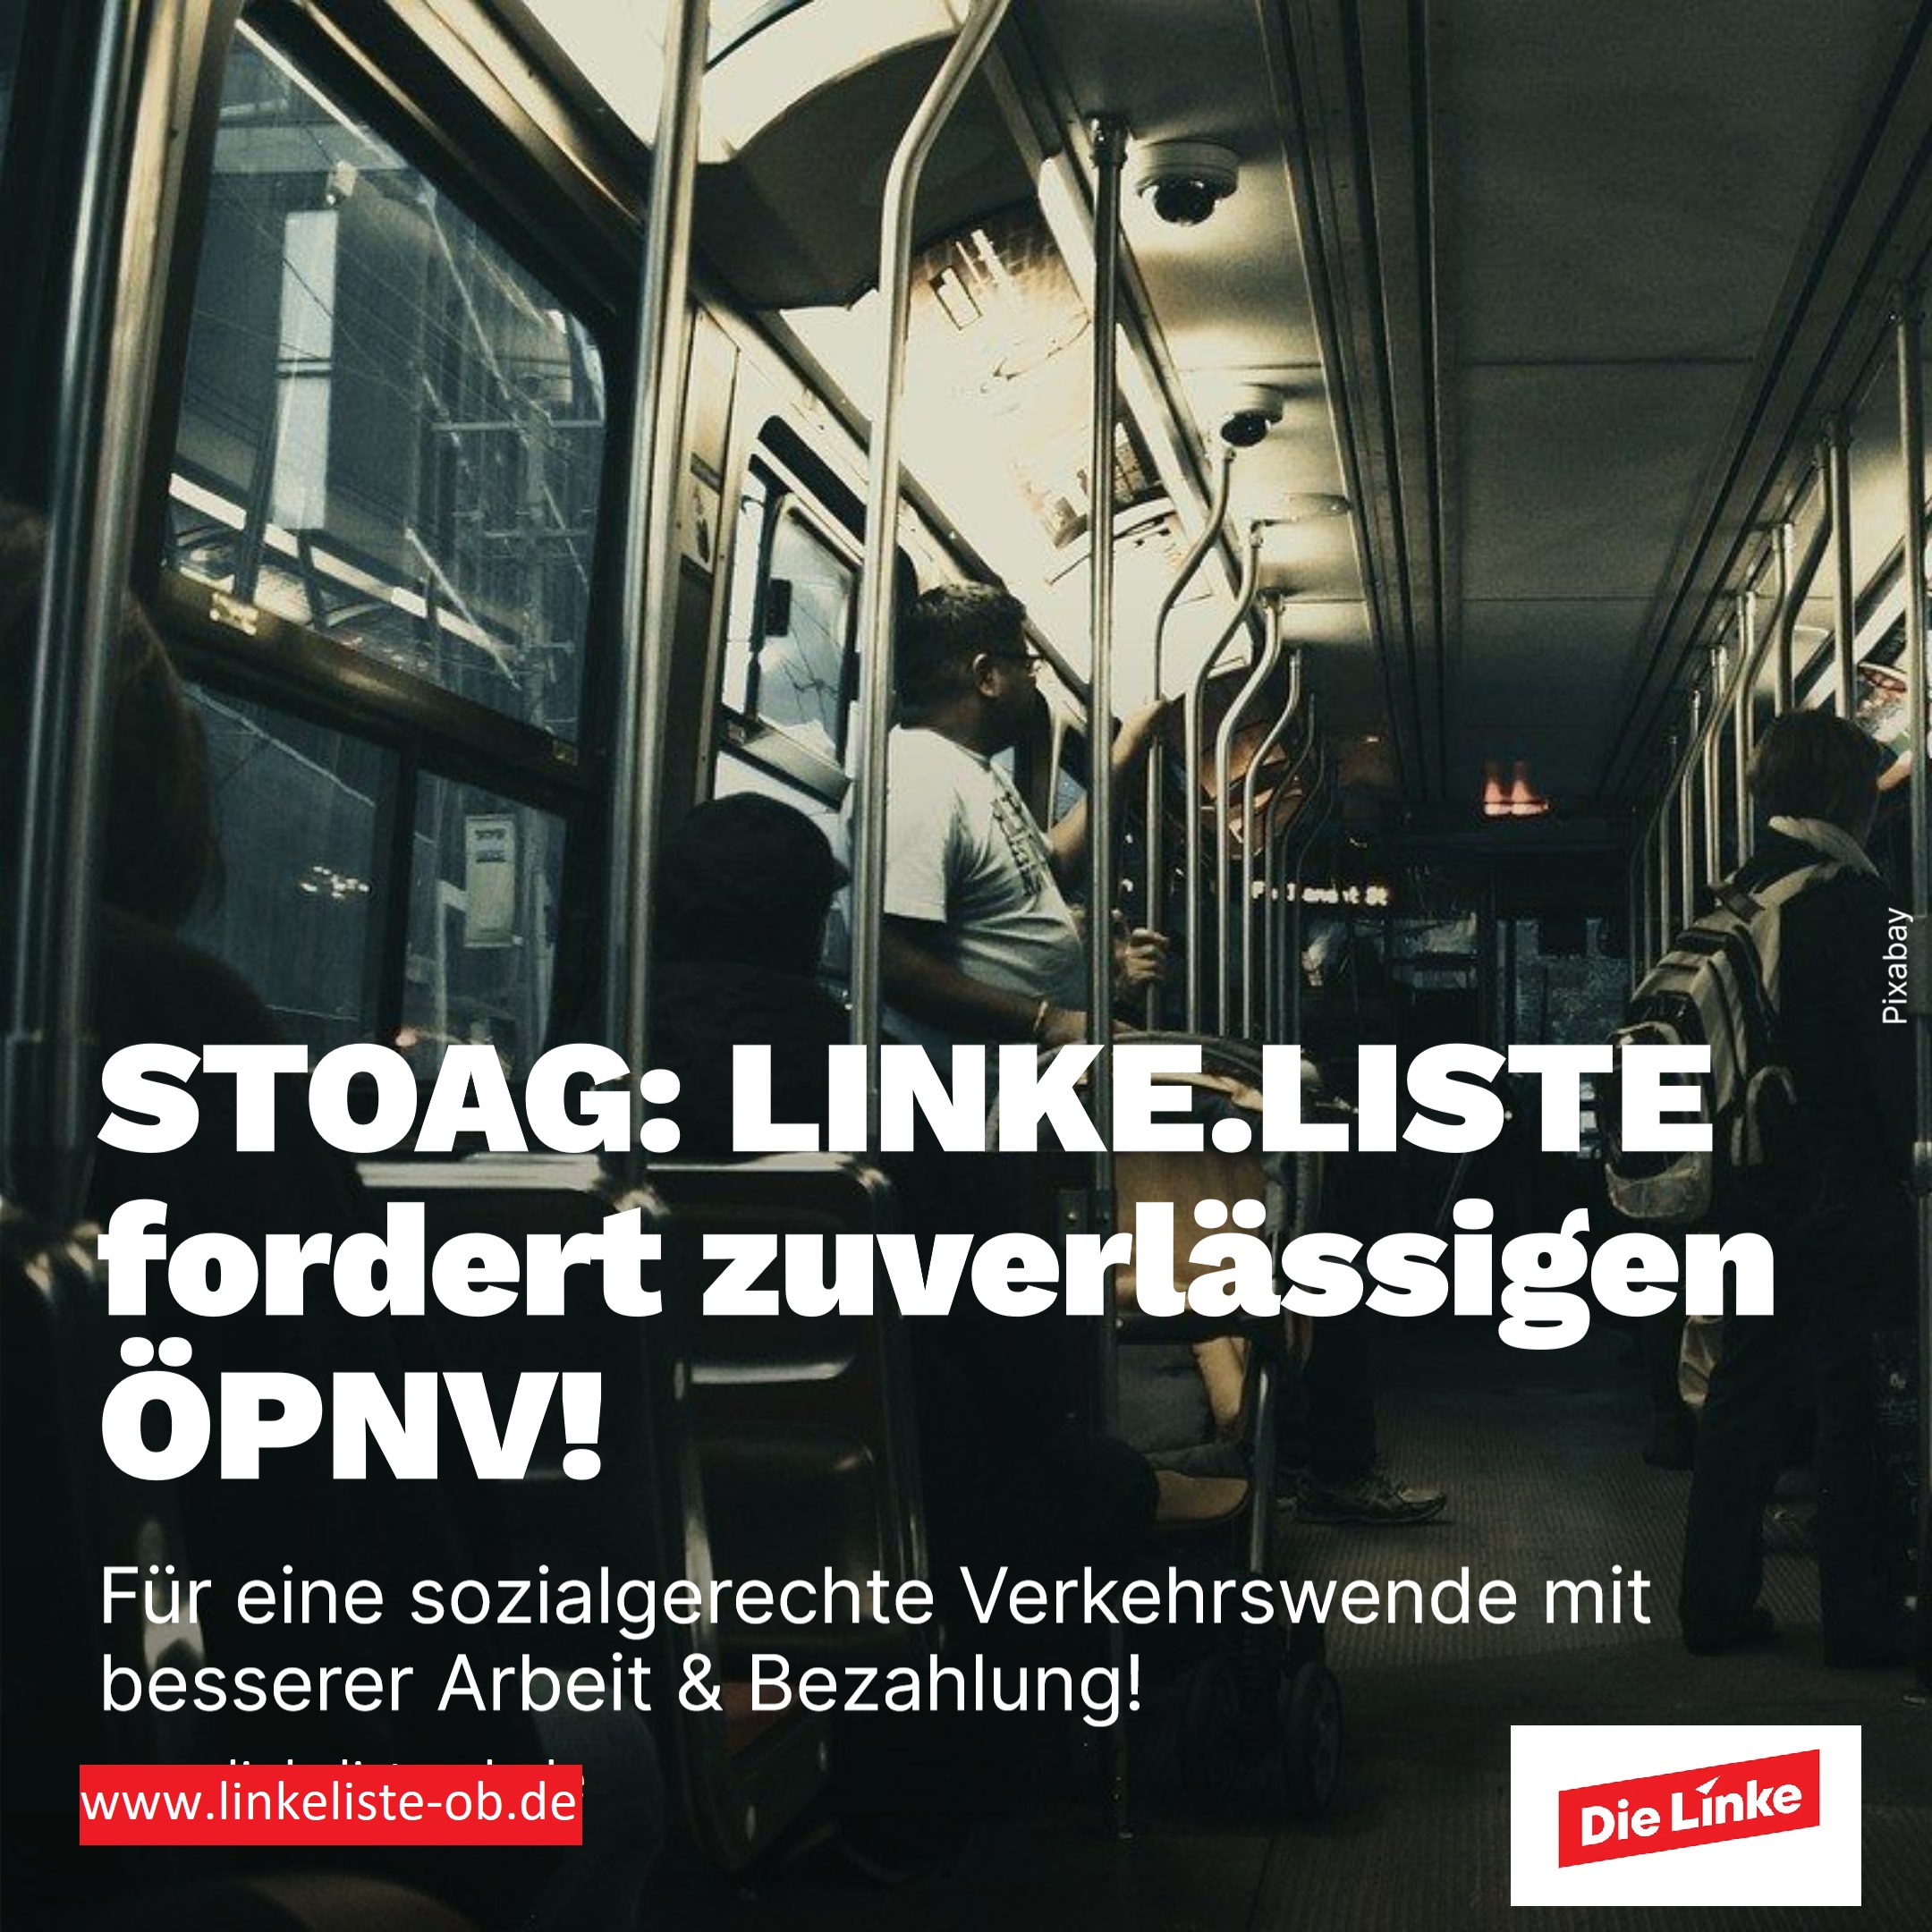 STOAG handelt auf dem Rücken ihrer Beschäftigten:  LINKE.LISTE fordert Stadt als Hauptgesellschafterin